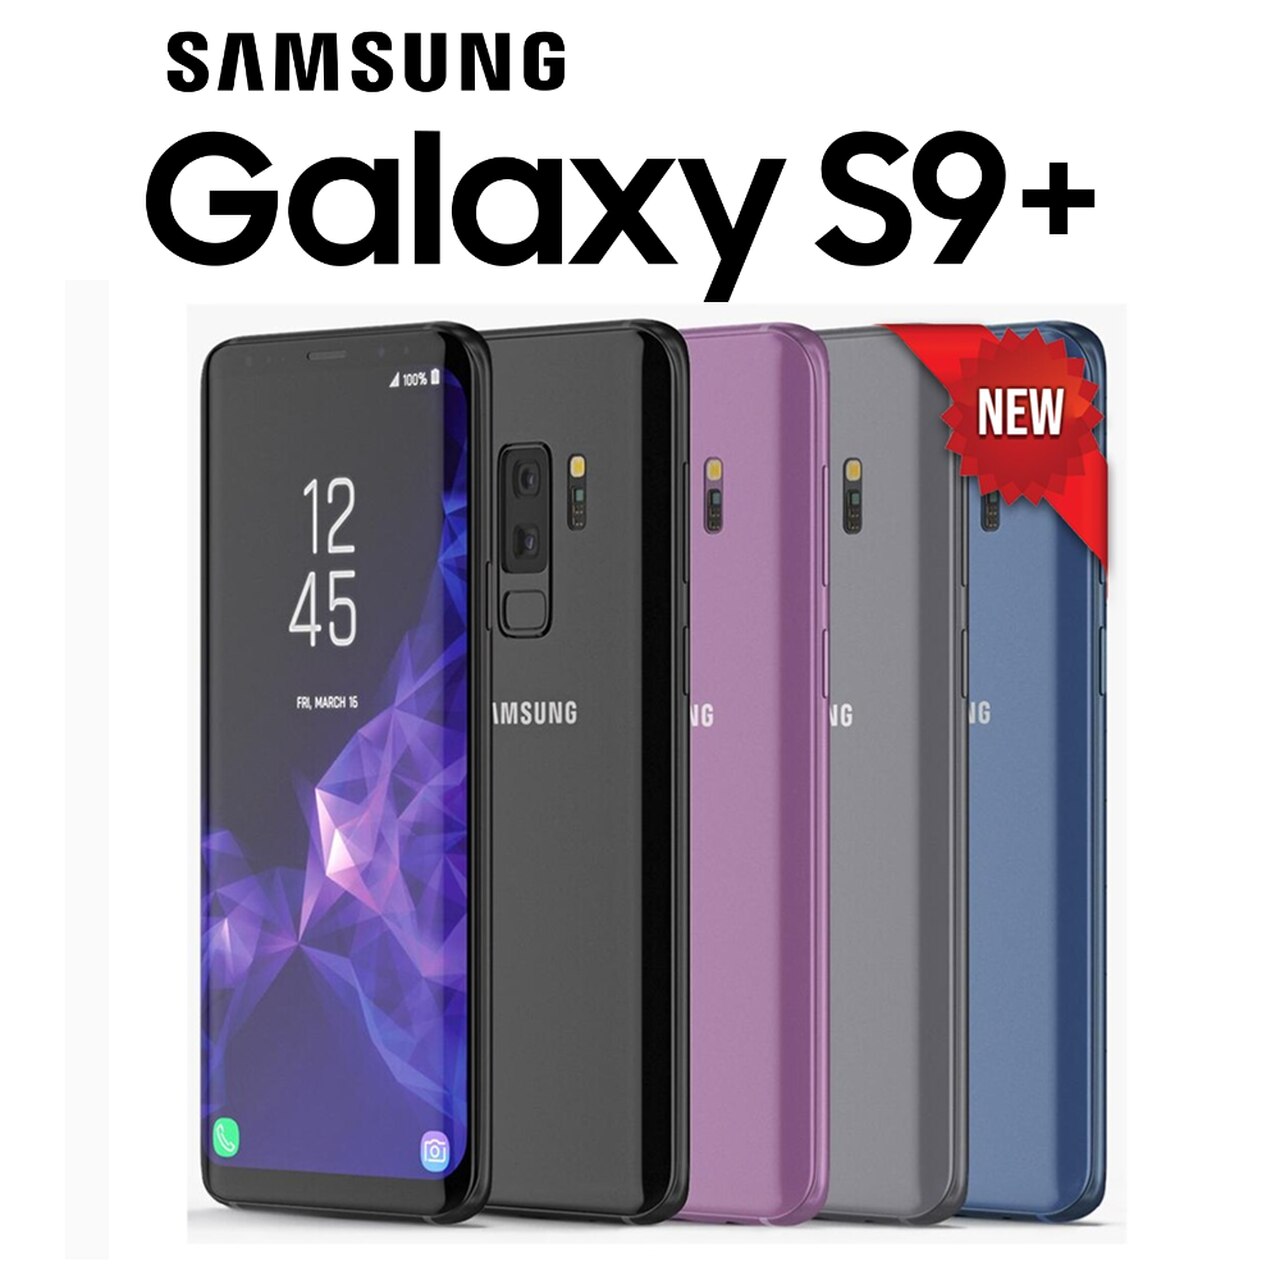 samsung galaxy s9 unlocked new